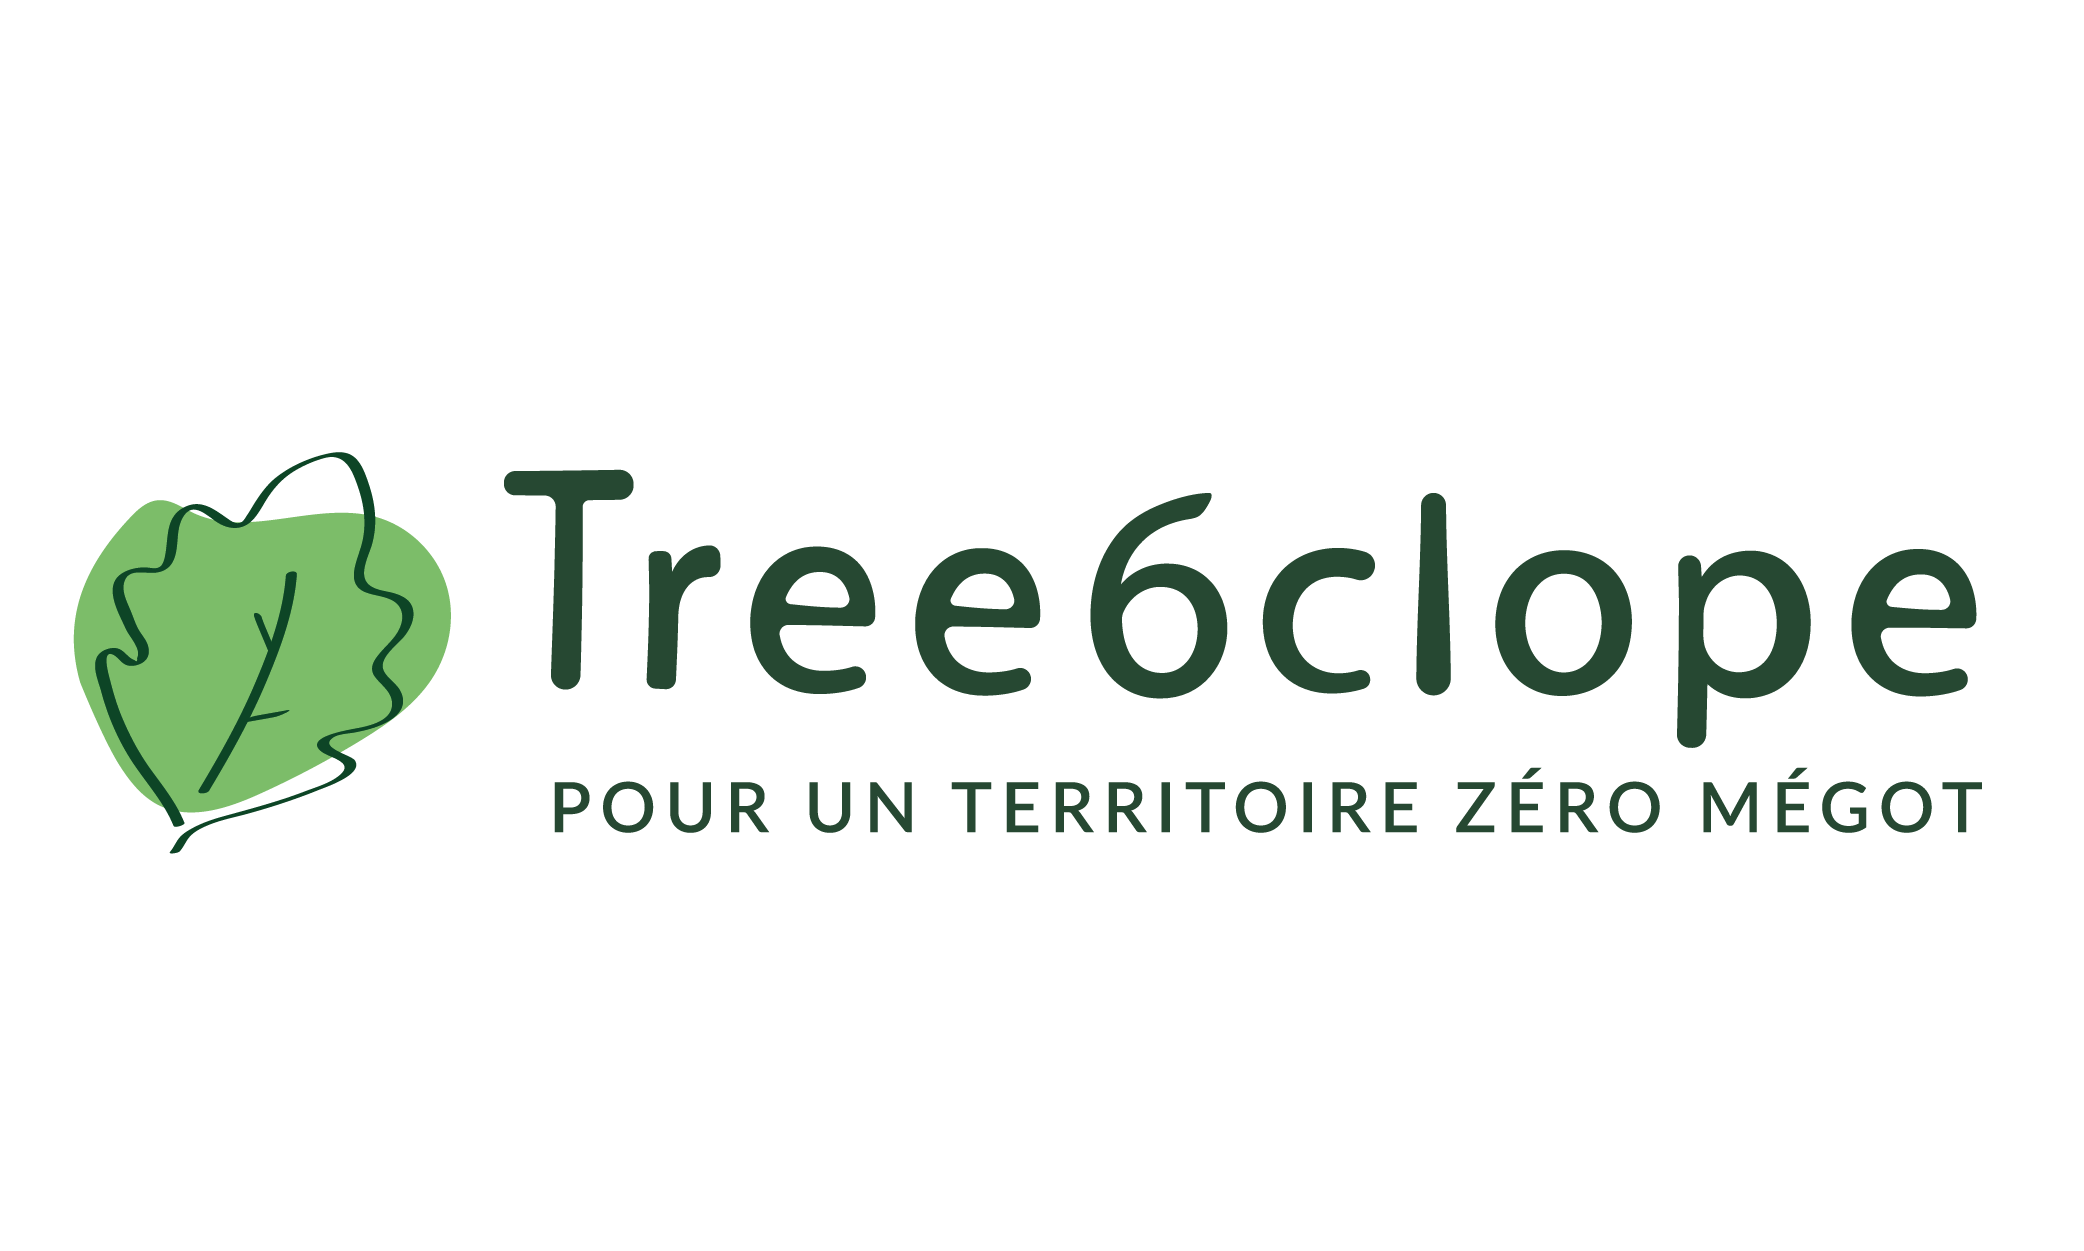 TREE6CLOPE